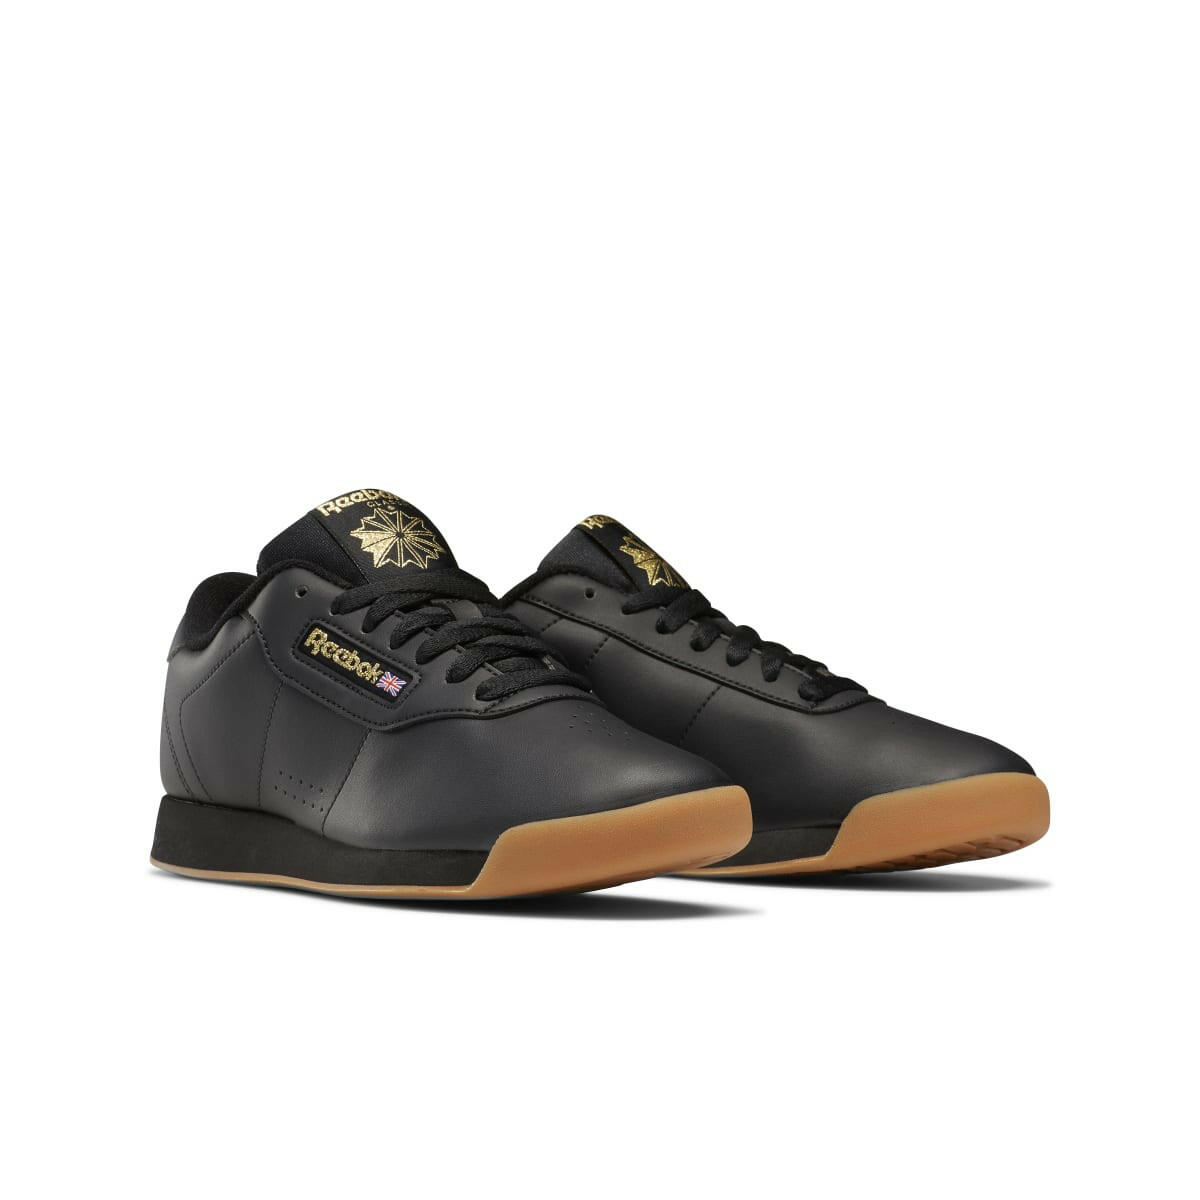 REEBOK BS8457 PRINCESS WMN'S (Medium) Black/Black/Black Synthetic/Leather Lifestyle Shoes - GENUINE AUTHENTIC BRAND LLC  